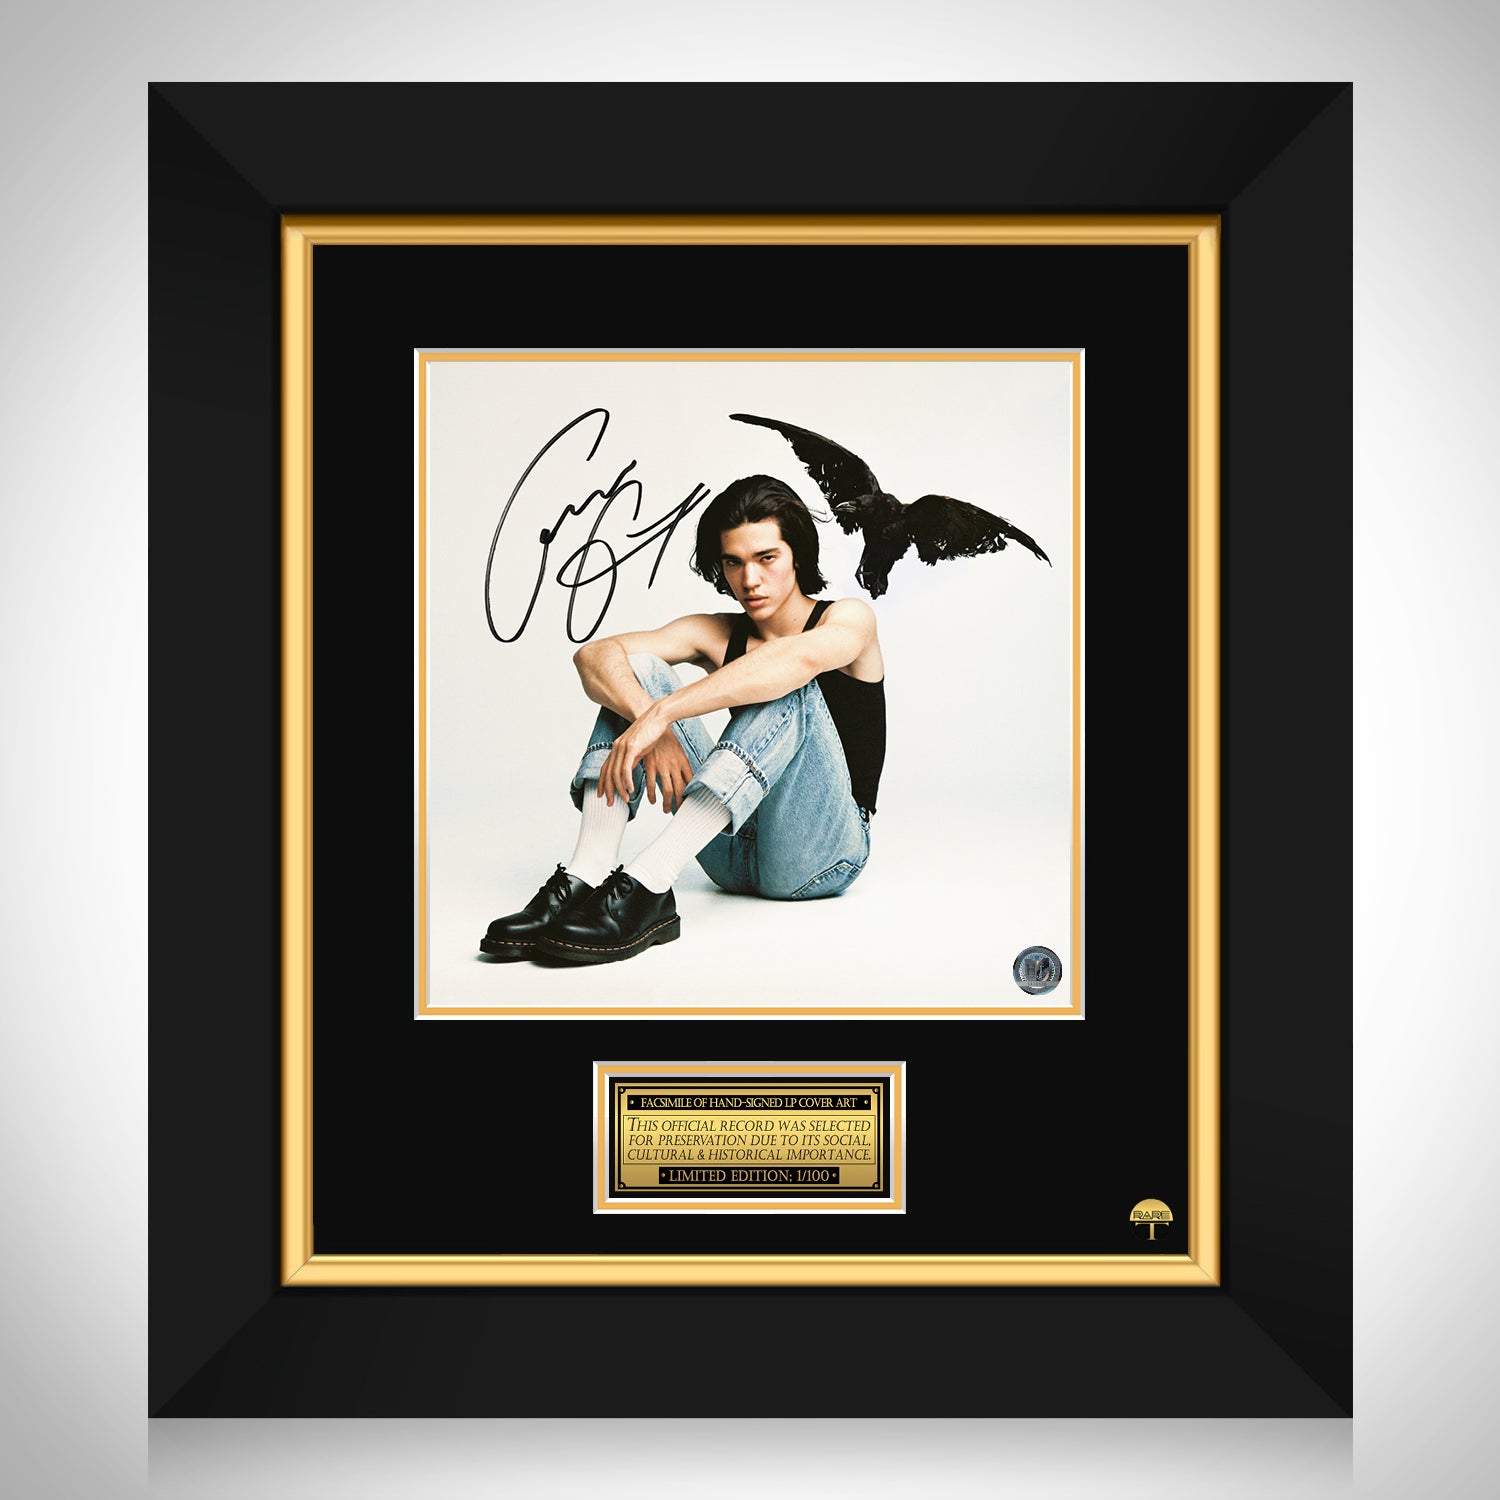 Conan Gray - Superache LP Cover Limited Signature Edition Custom Frame